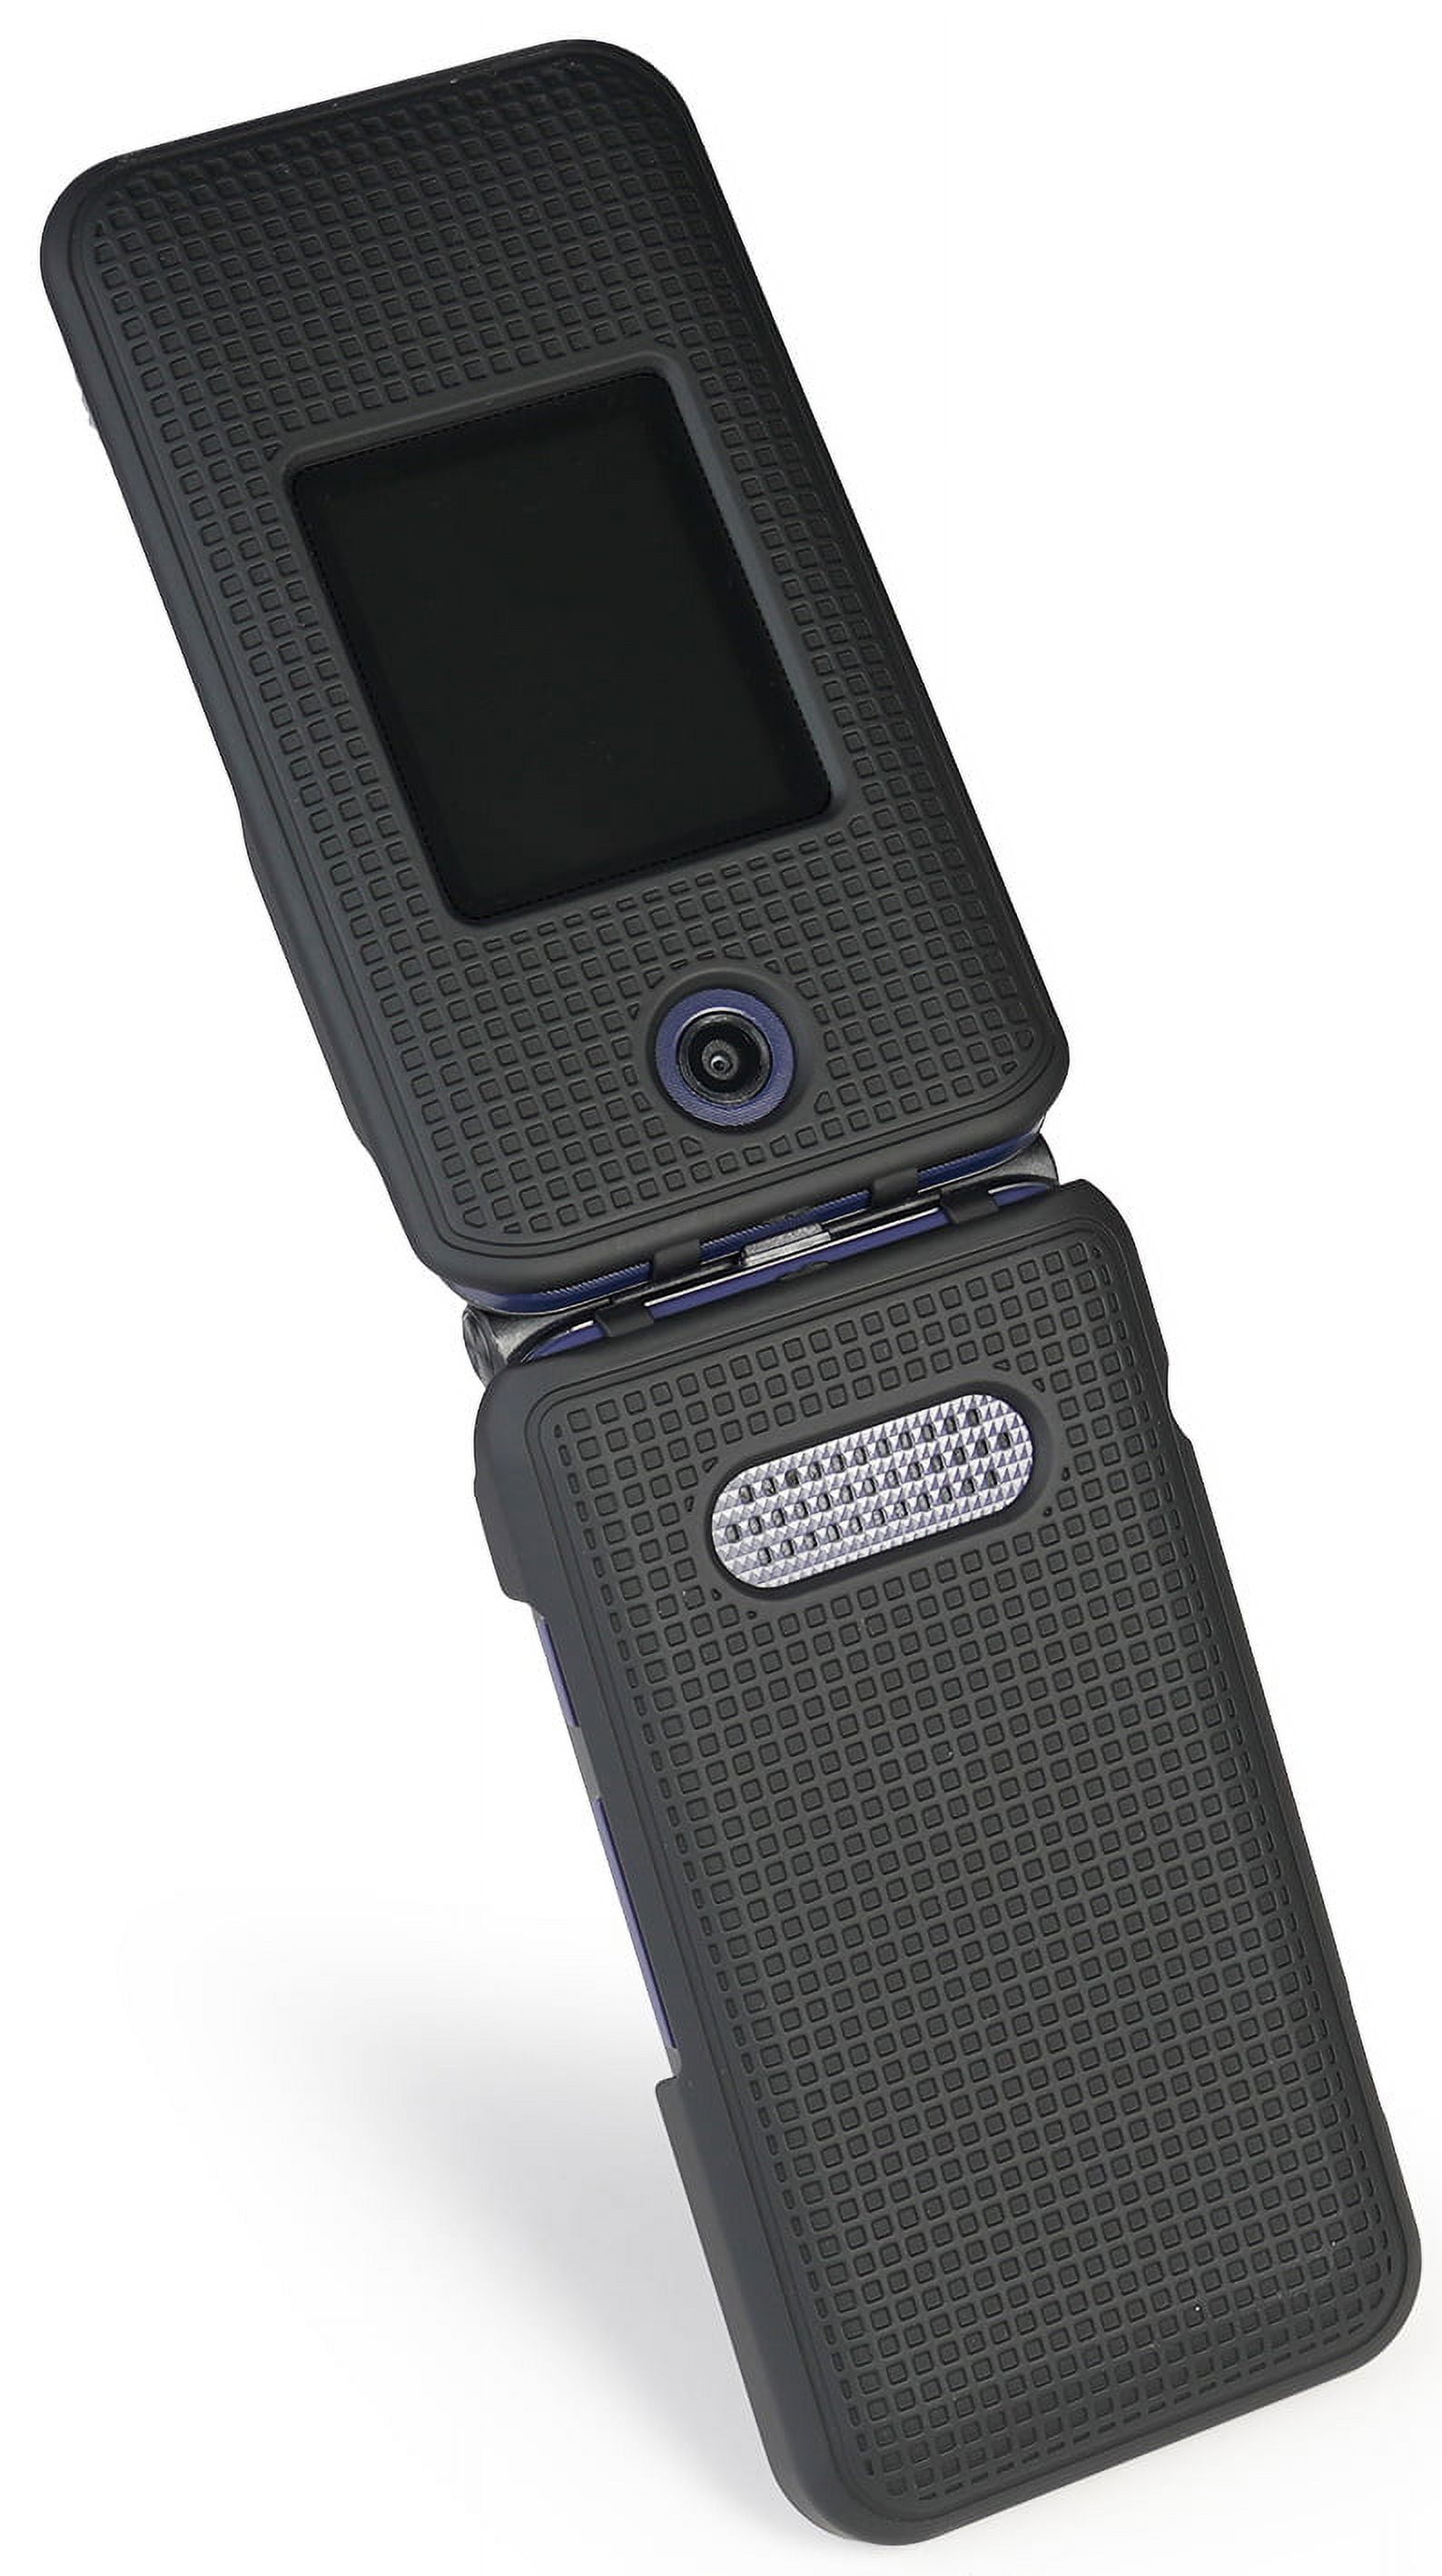  Universal Flip Phone Case with Belt Loop Clip, Shoulder/Crossbody  Strap, Zipper Wallet, Great for Alcatel Go Flip V, Cingular Flip 2, MyFlip,  Quickflip, K9570 : Cell Phones & Accessories